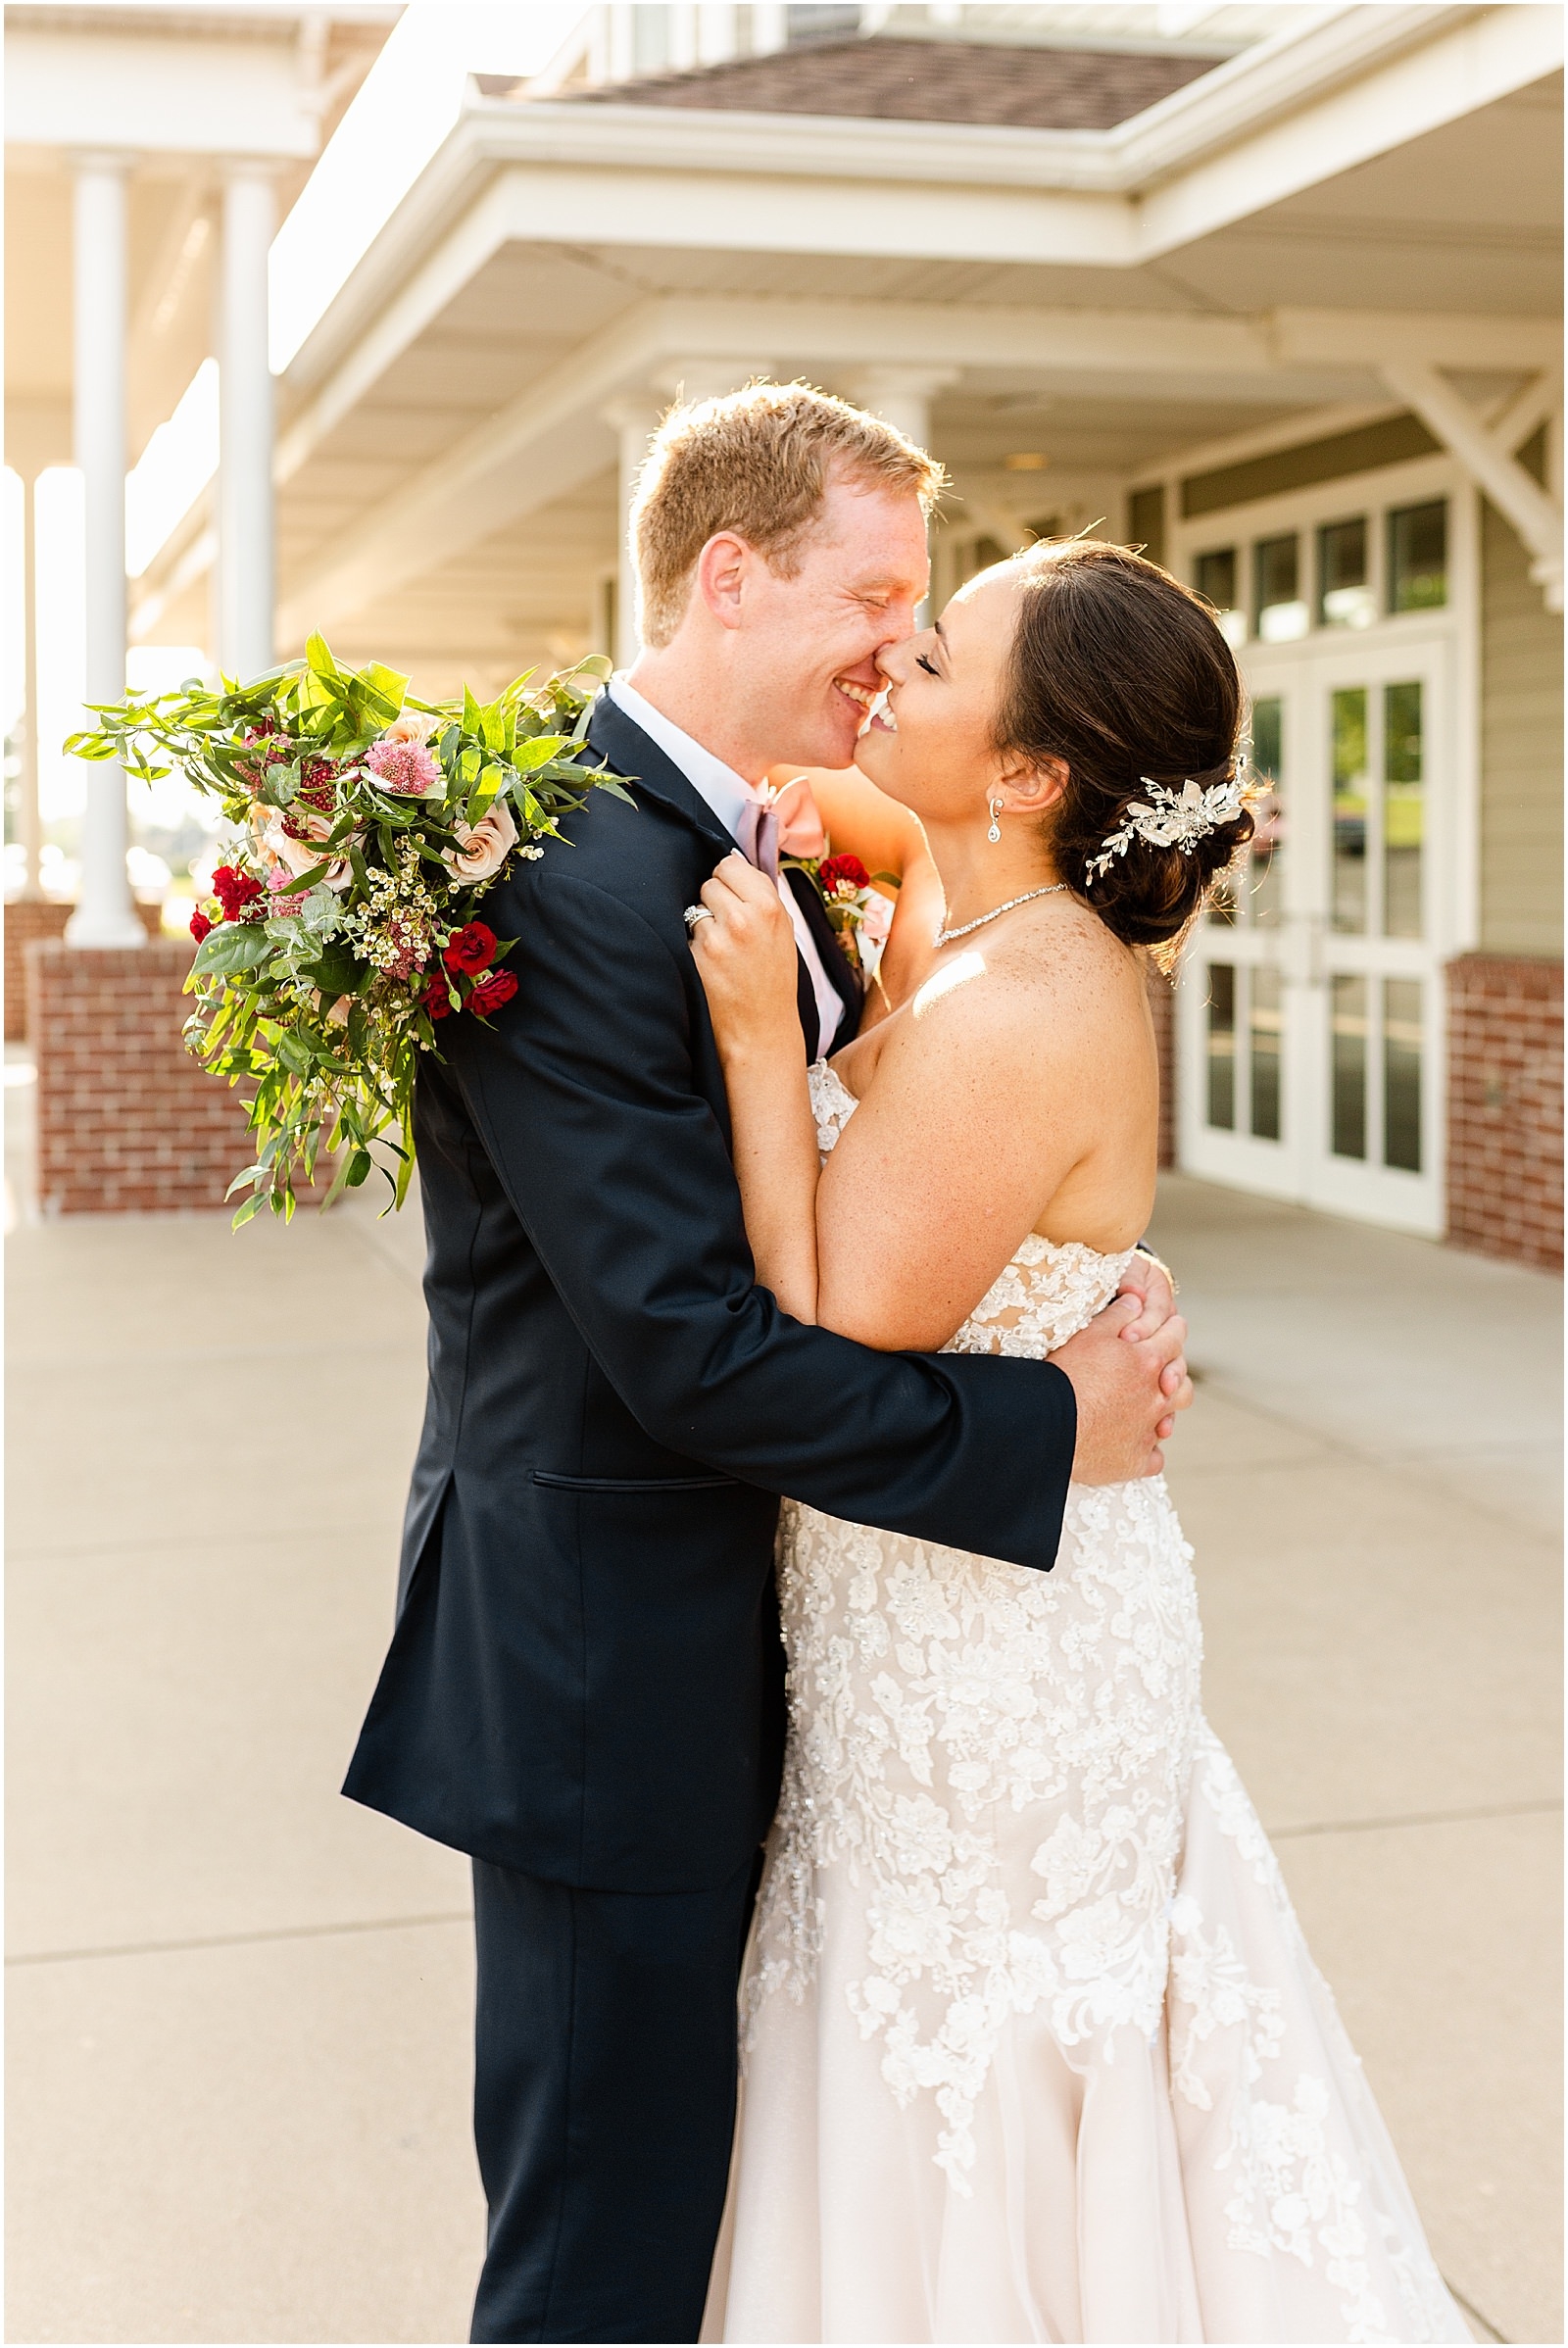 Deidra and Andrew | A Huntingburgh Indiana Wedding Bret and Brandie | Evansville Photographers | @bretandbrandie-0125.jpg